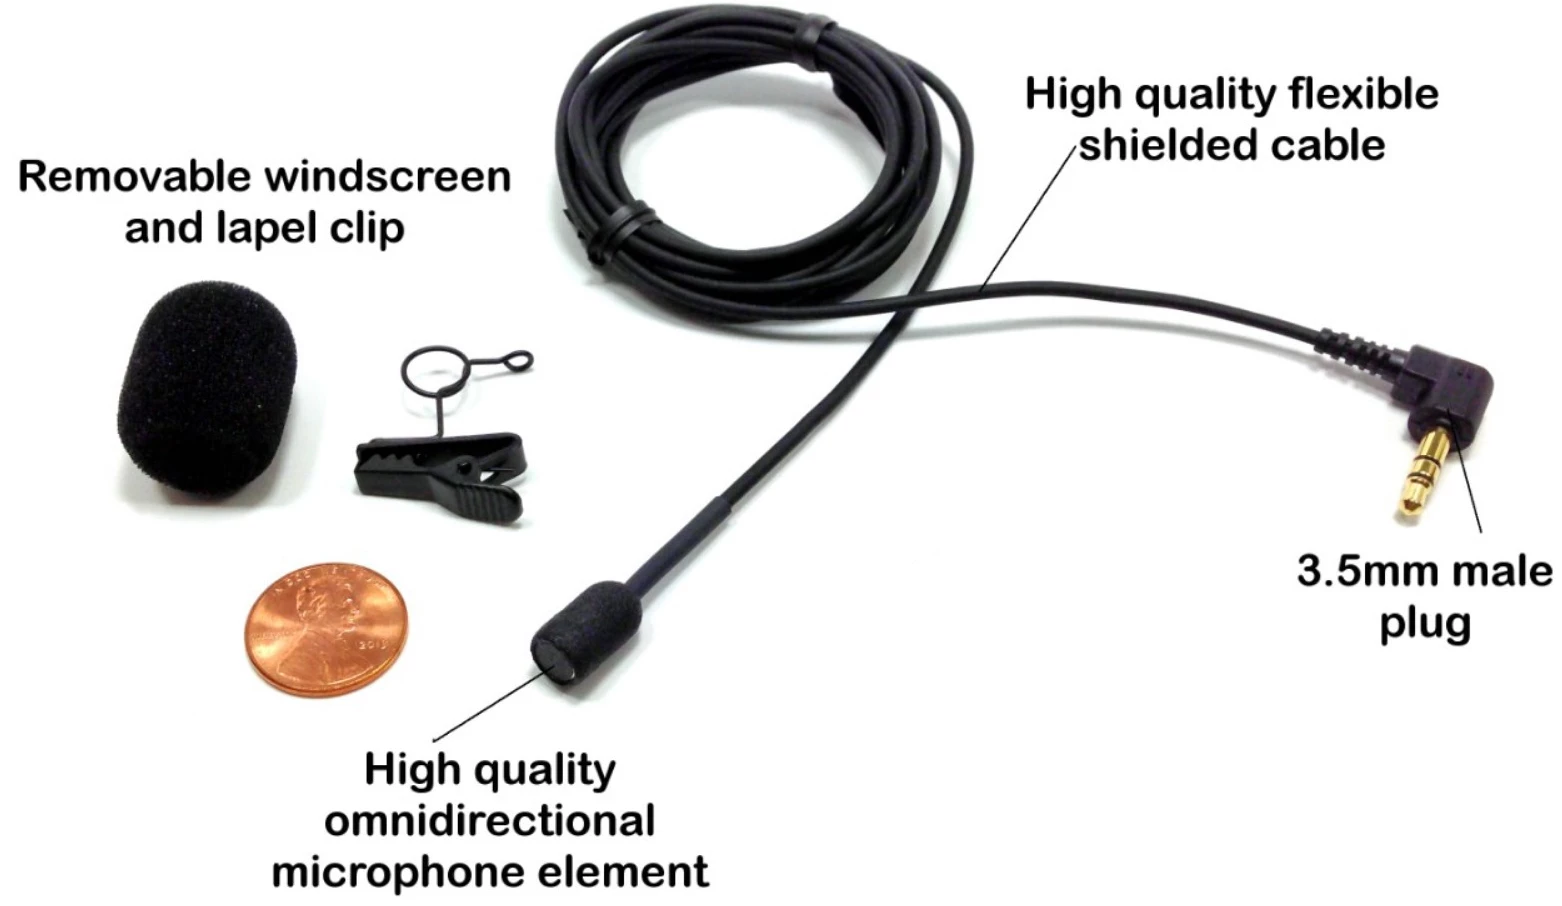 Lavalier Collar Mic for Phone 3.5mm - Unique Accessories